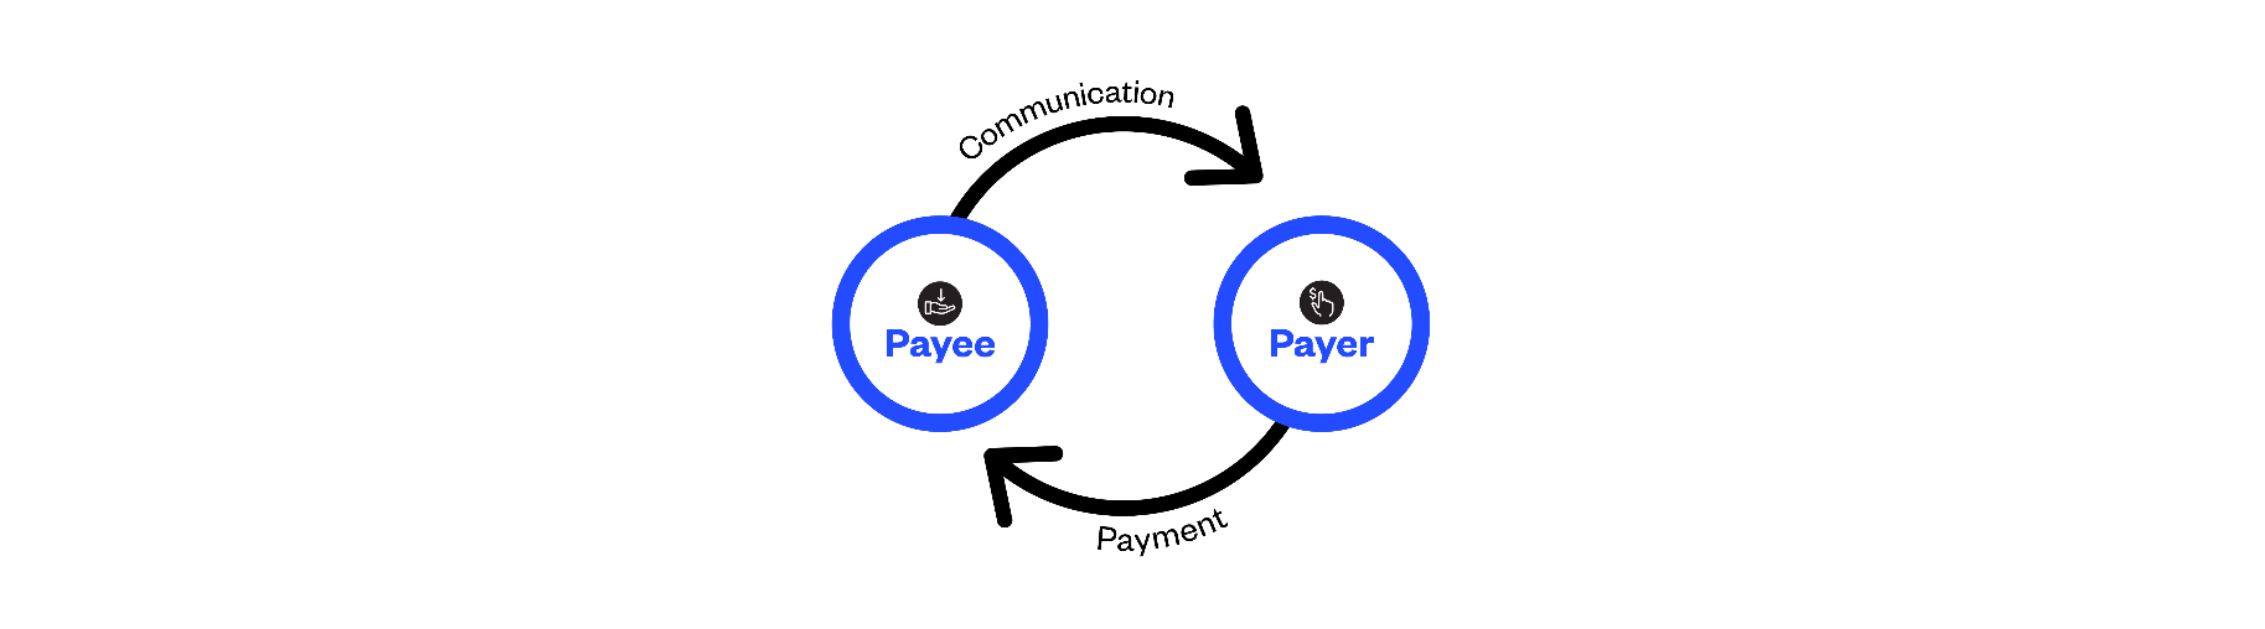 payee-payer-EFT-communication